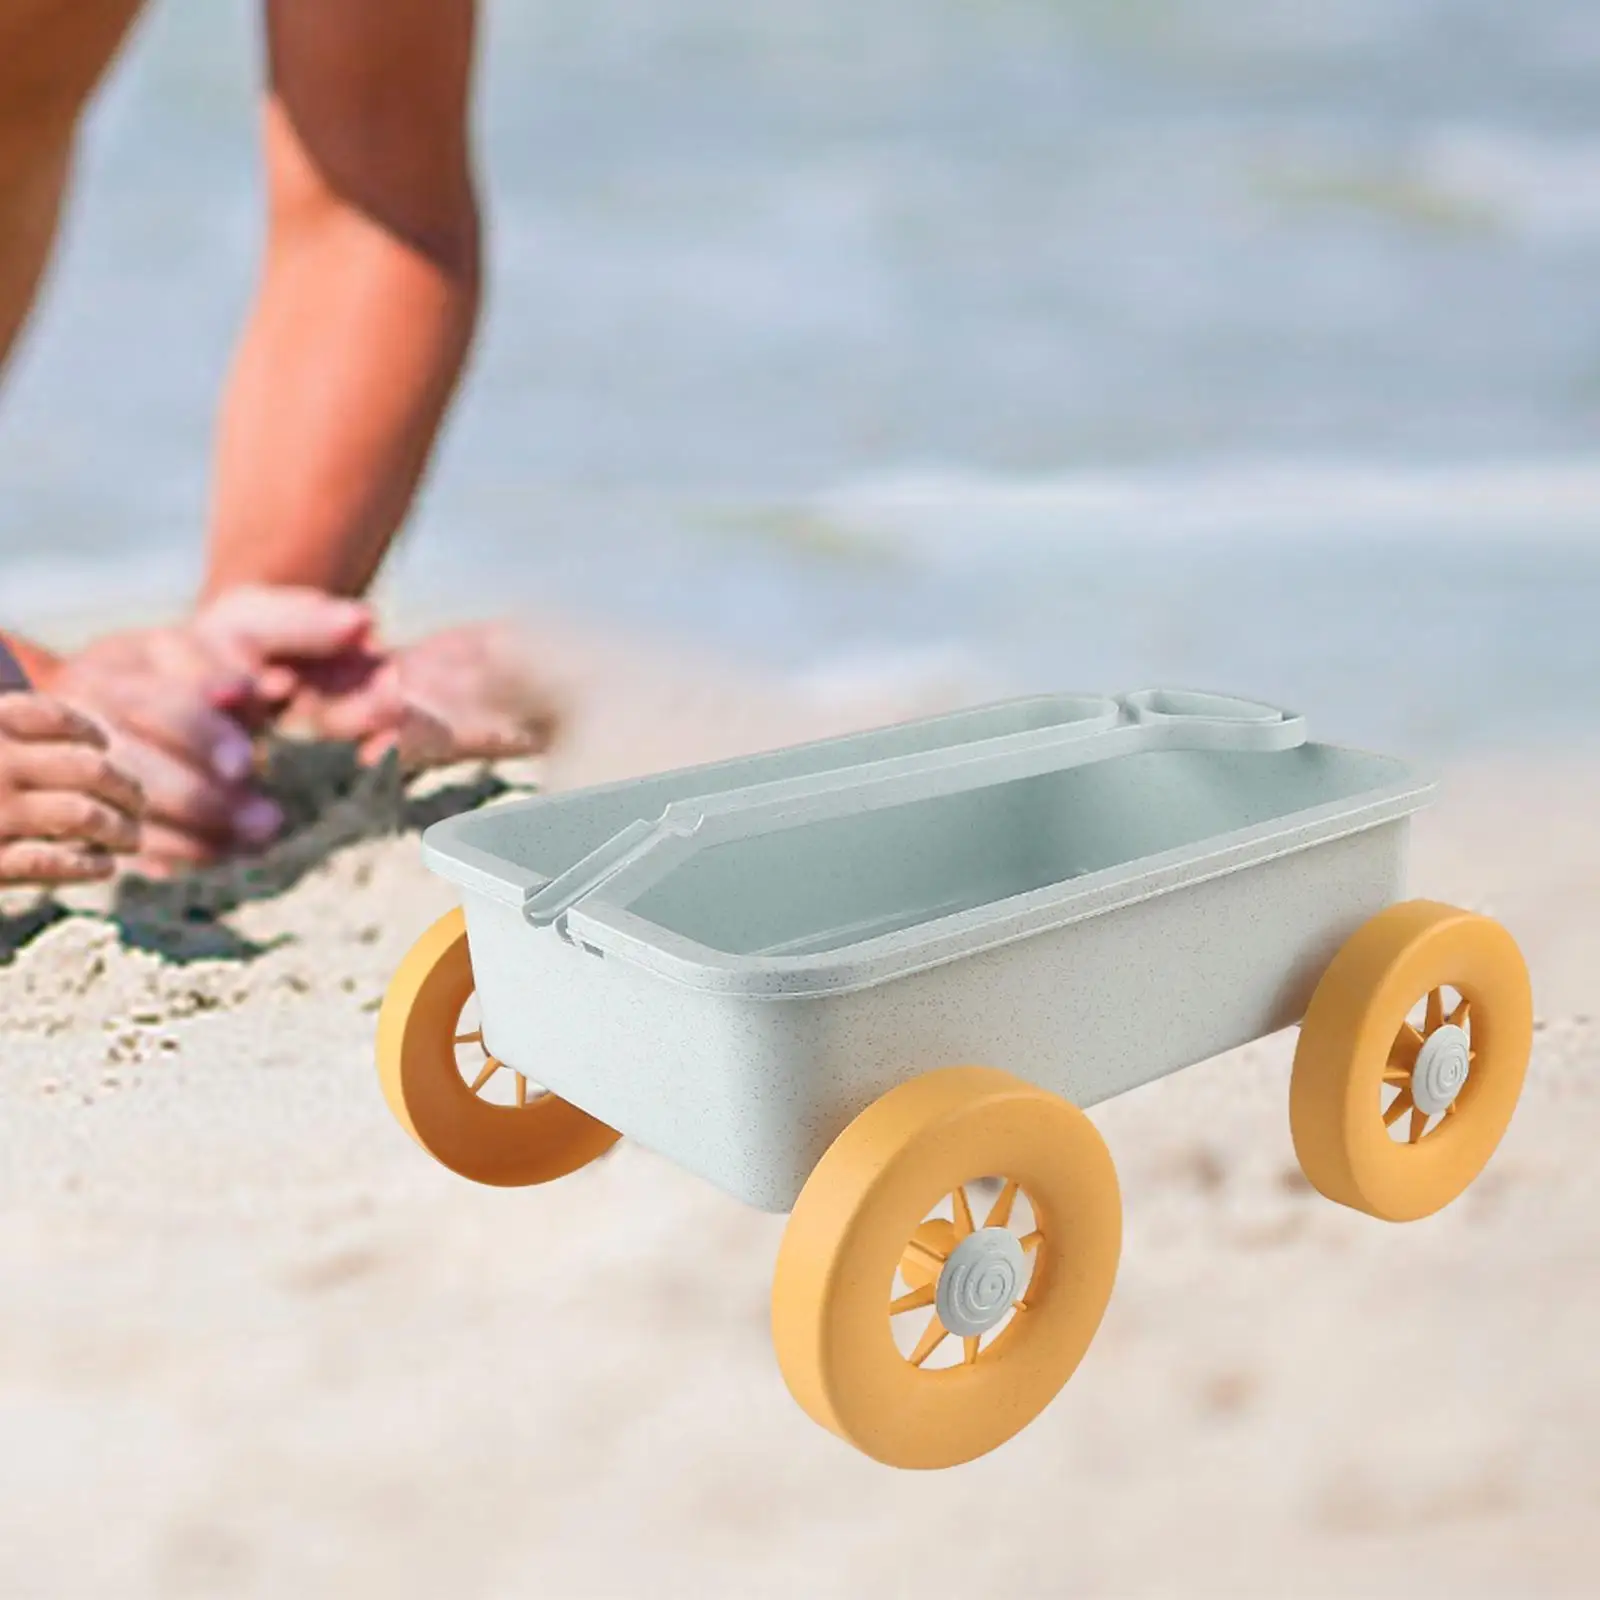 Garden Wagon Tools Toy Vehicle Beach Toys Wagon Small Wagon Toys Wheelbarrow for Stuffed Animals Holding Small Toys